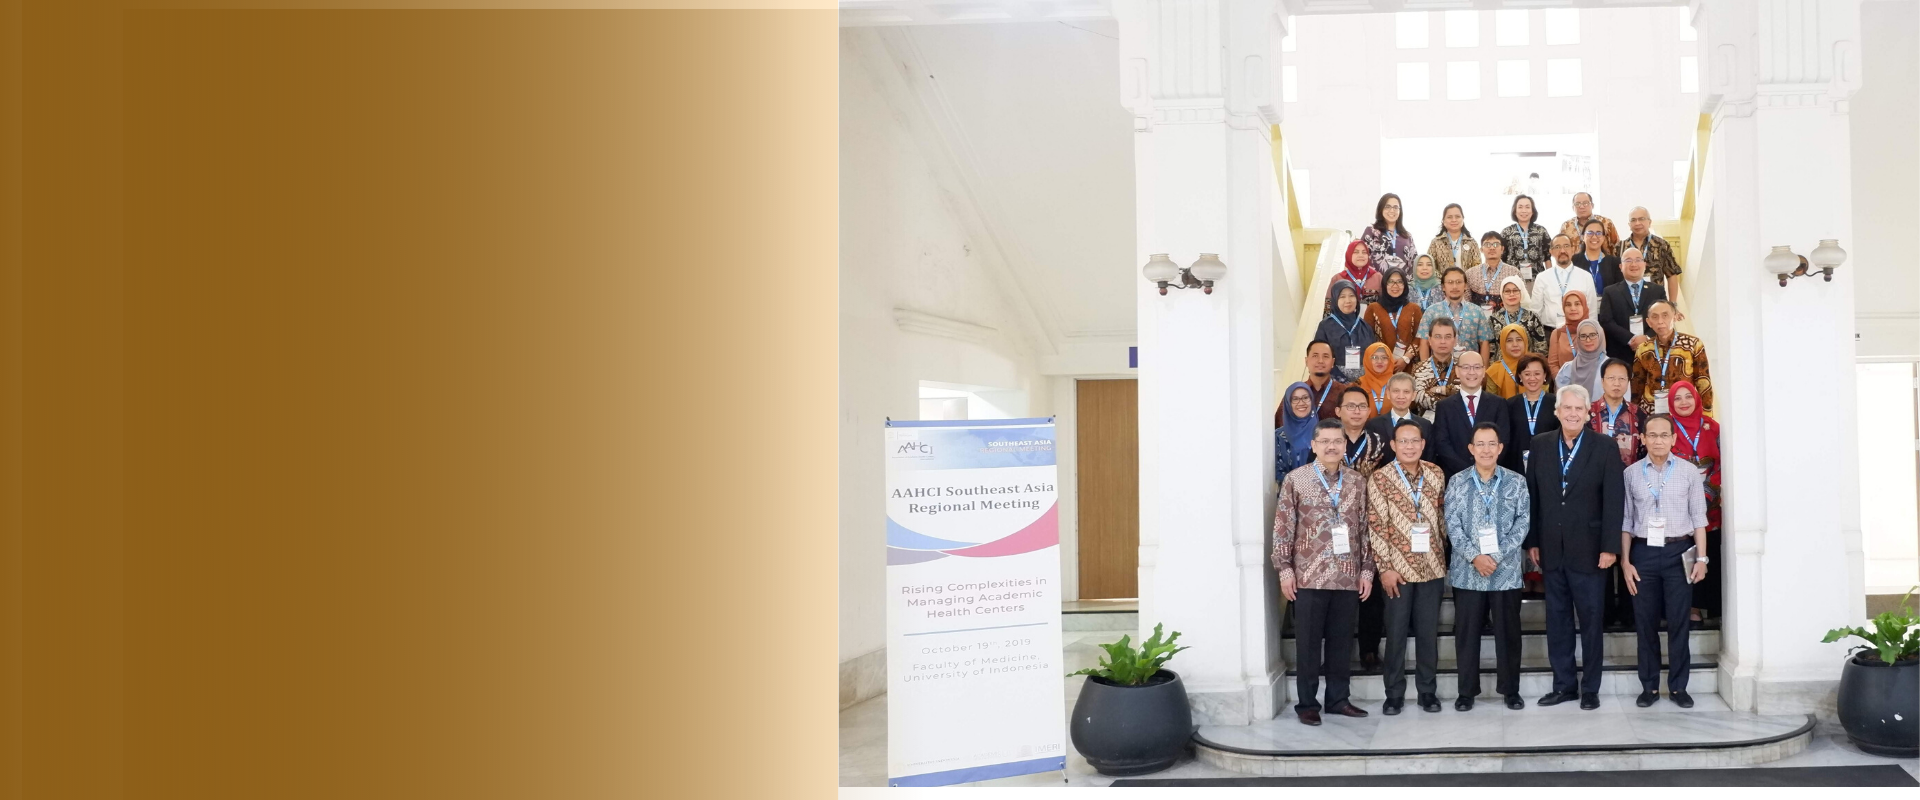 AAHCI Southeast Asia Regional Meeting 2019